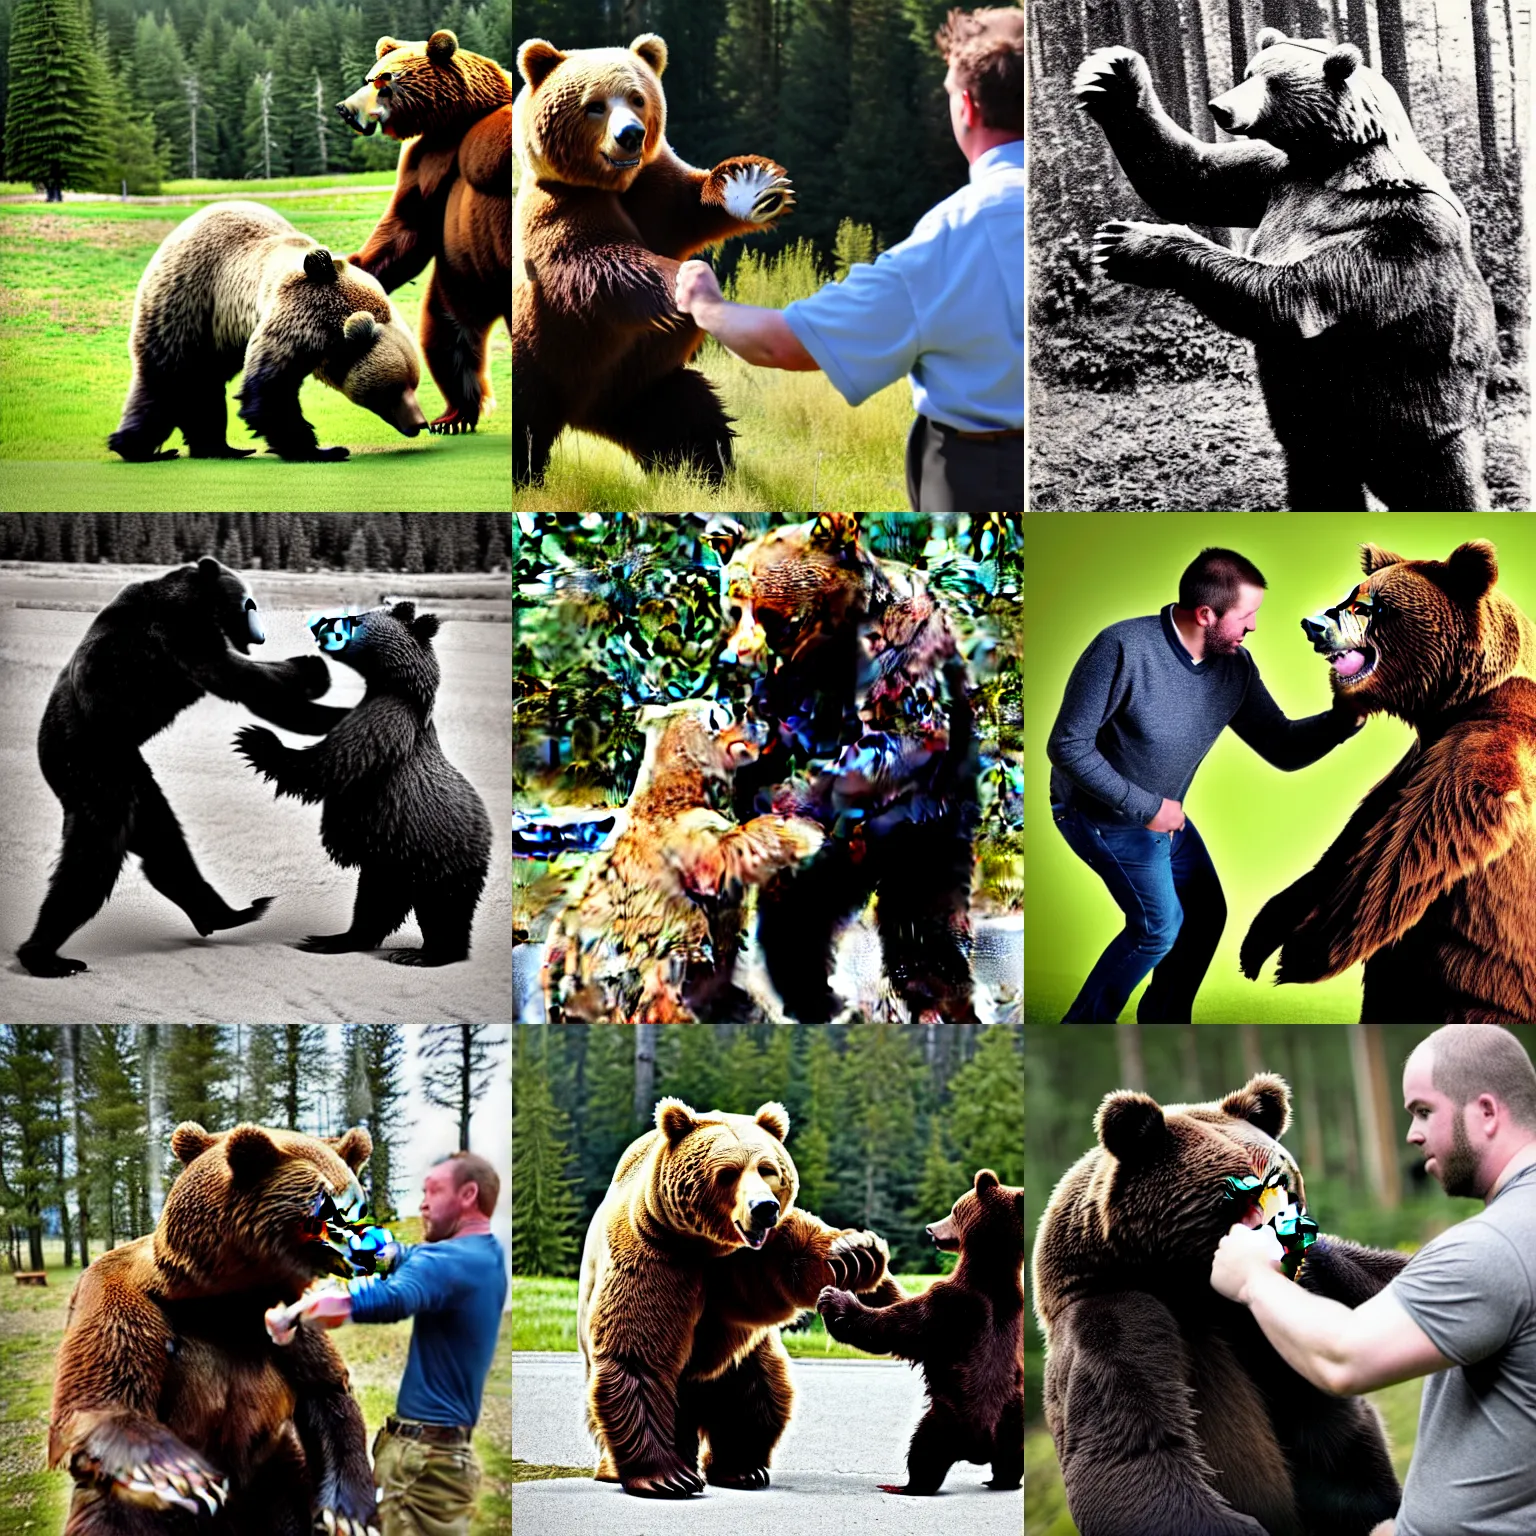 Prompt: photo, A man punching a bear.